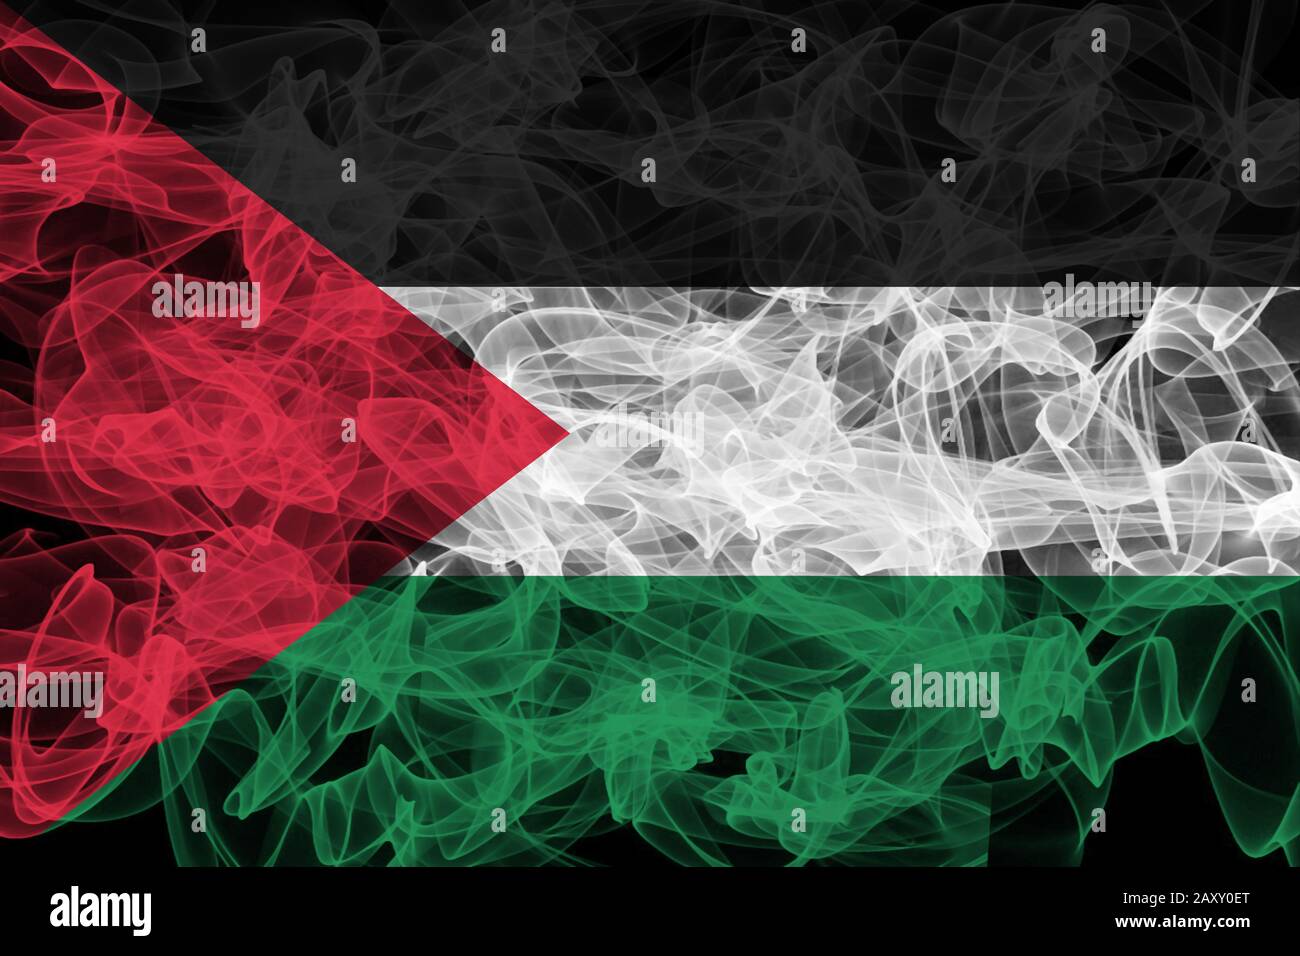 Palestine Smoke Flag on Black Background, Palestine flag Stock Photo